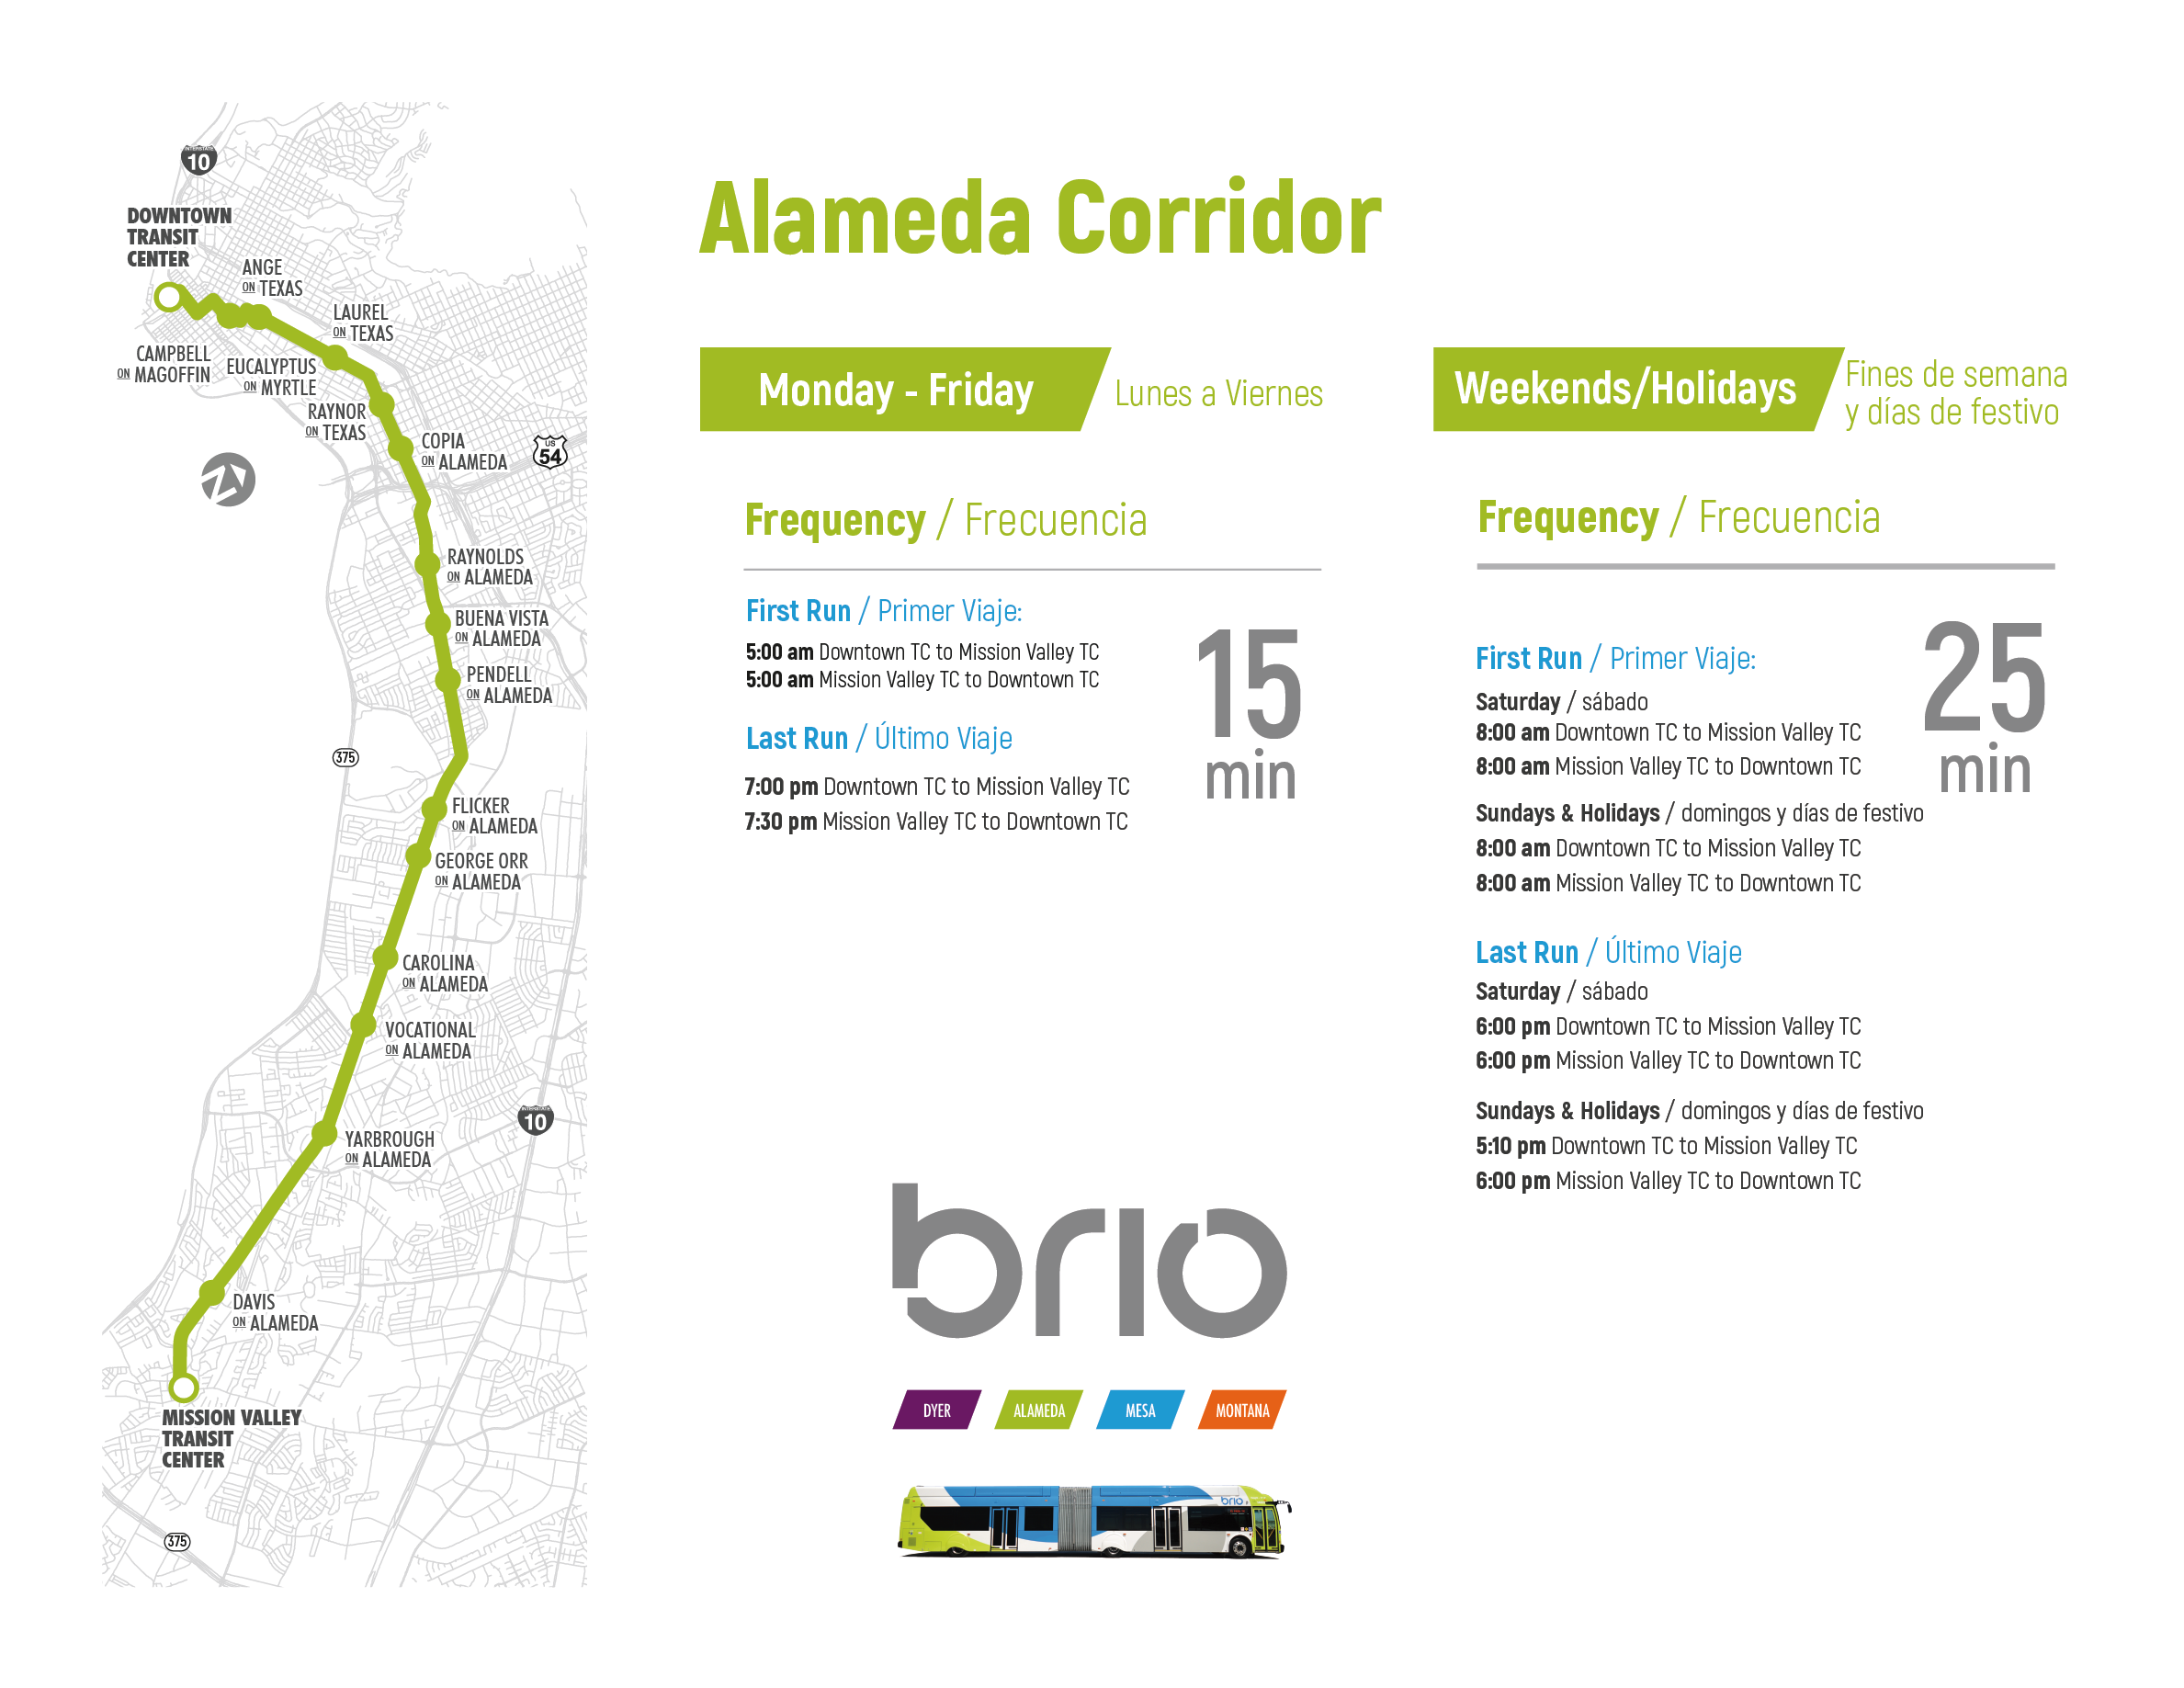 Image of Alameda Corridor route